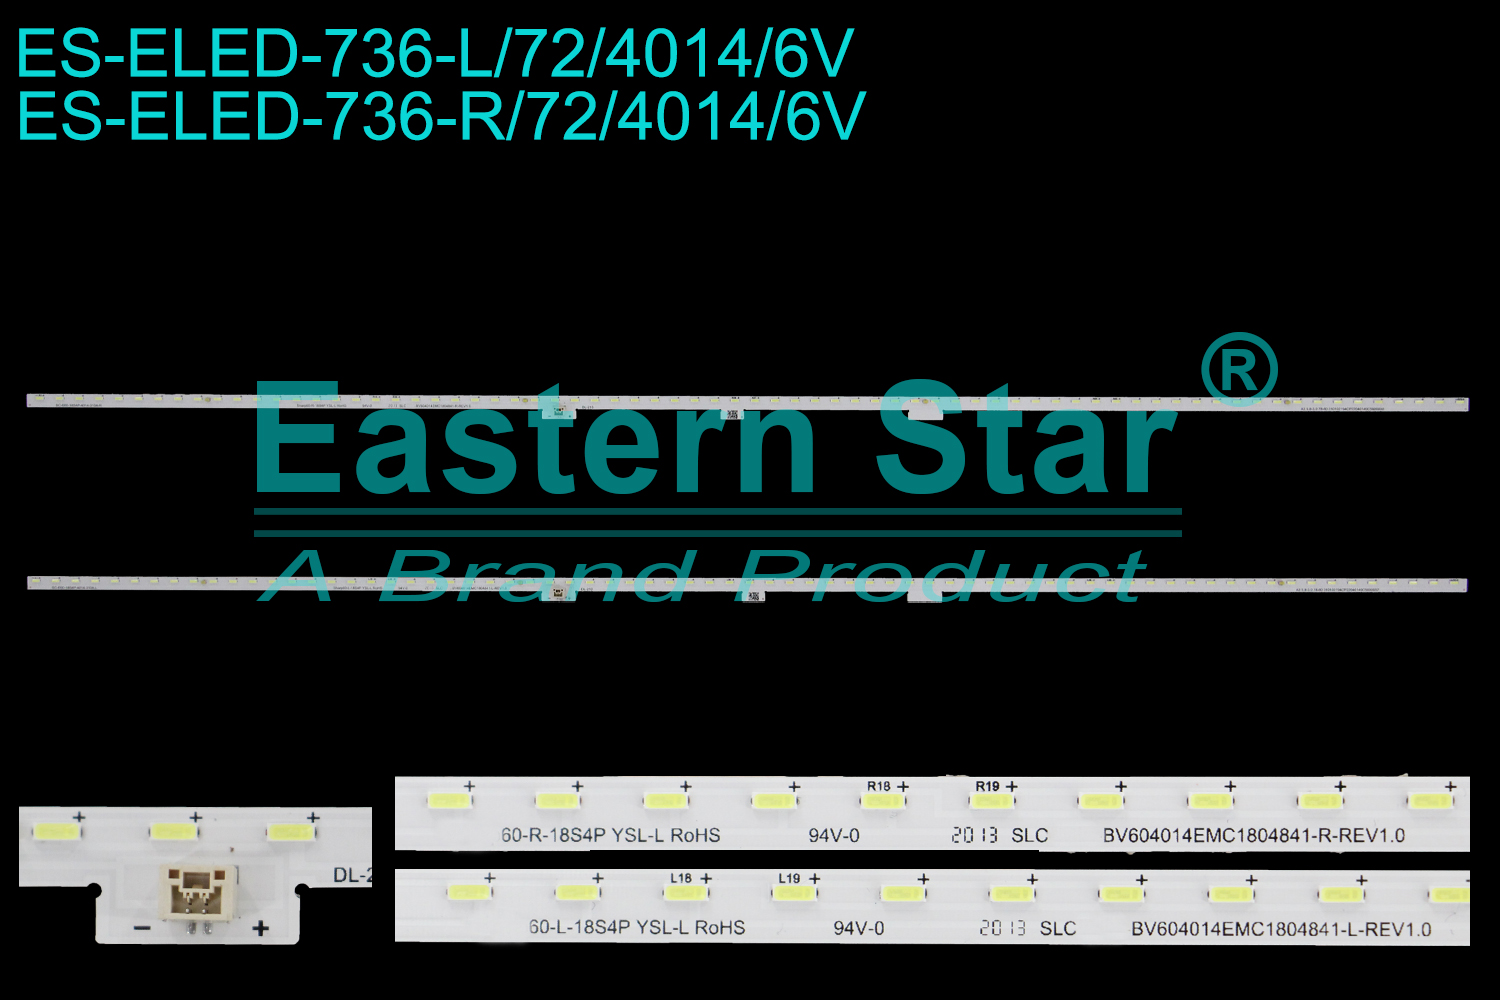 ES-ELED-736 ELED/EDGE TV backlight use for 60'' Sharp 4T-C60AL1X R/L:SC-E60-18S4P-4014-310A-R 60-R/L-18S4P YSL-L/R 94V-0 2013 SLC BV604014EMC1804841-R-REV1.0 A3 5.8-3.0 78-80 310102194CP22040149C5600057  LED STRIPS(2)